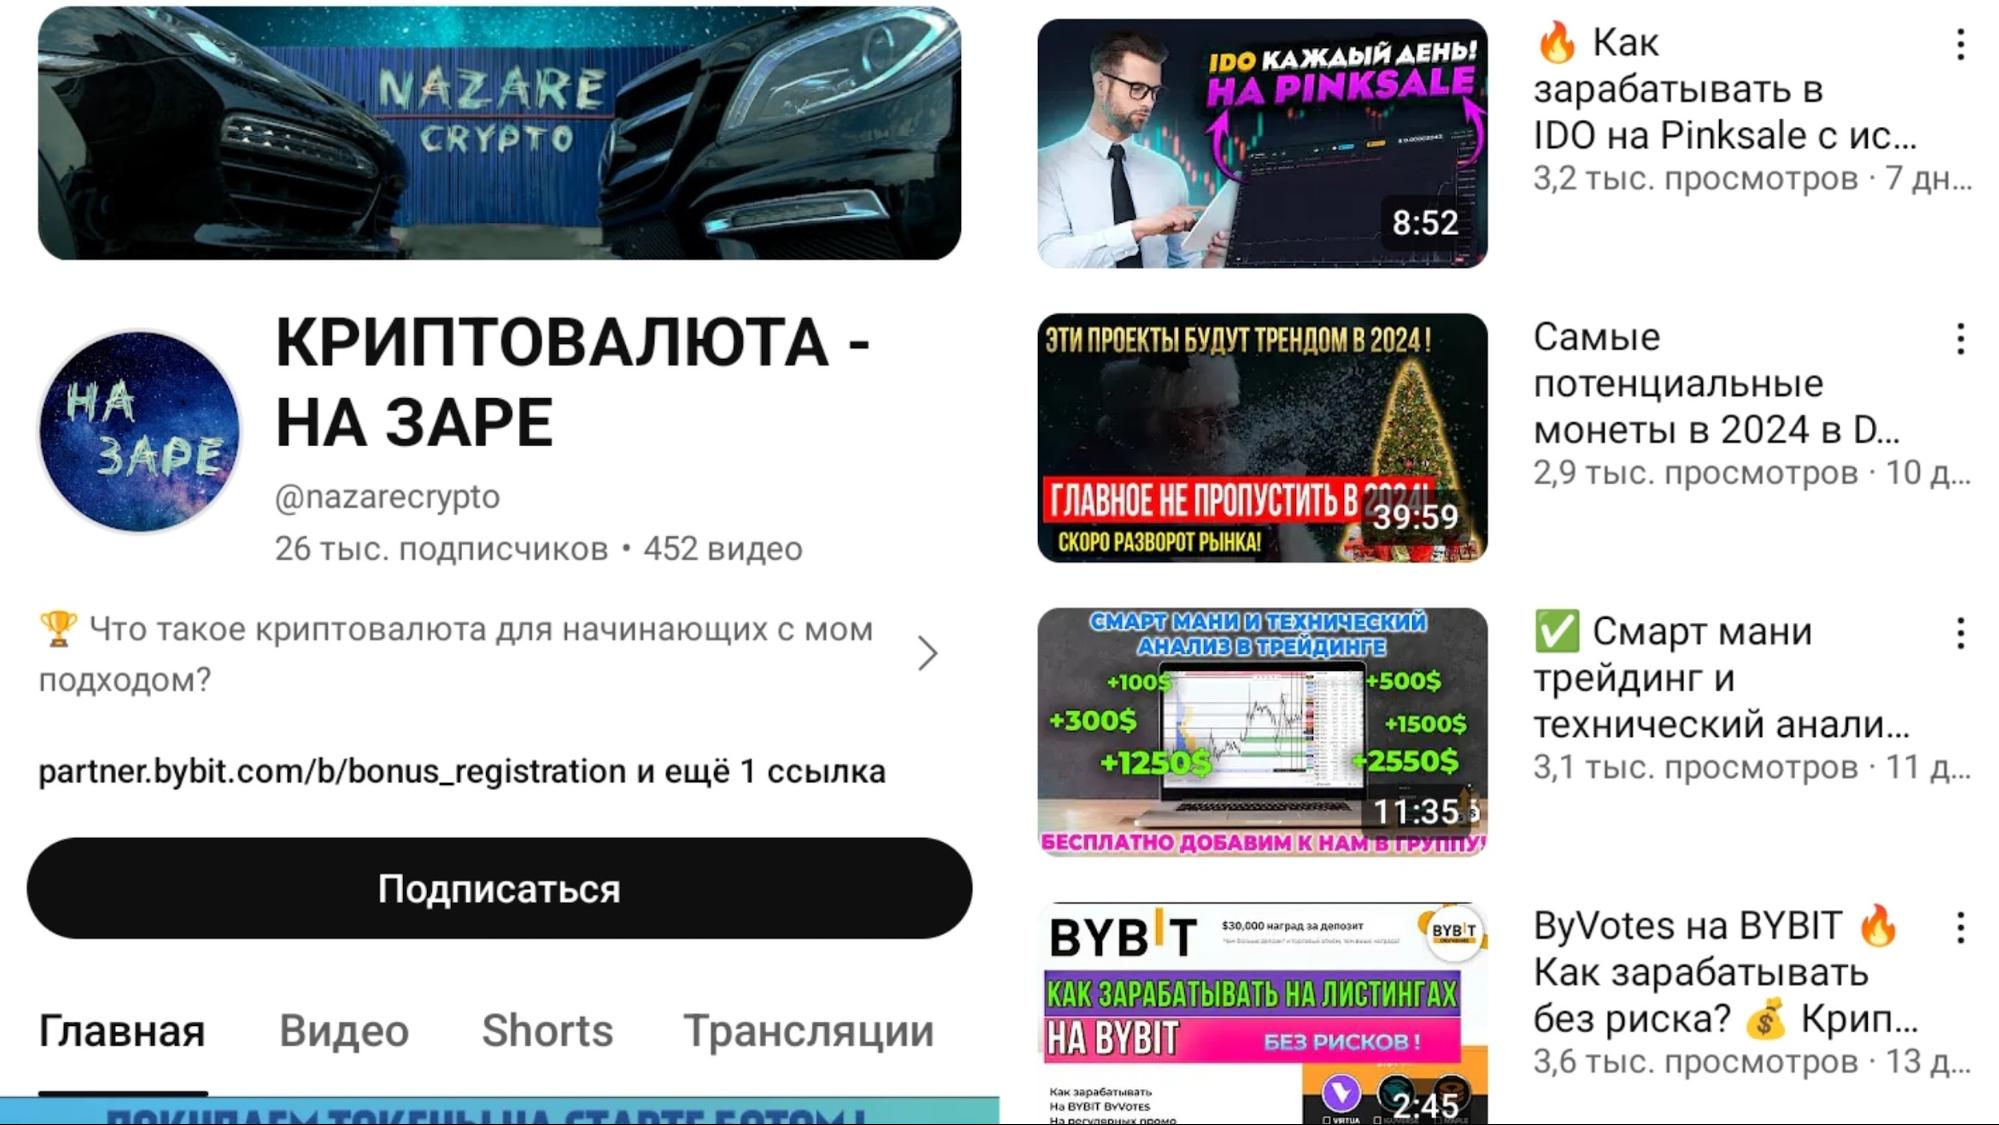 Ютуб-канал Назаре Крипто